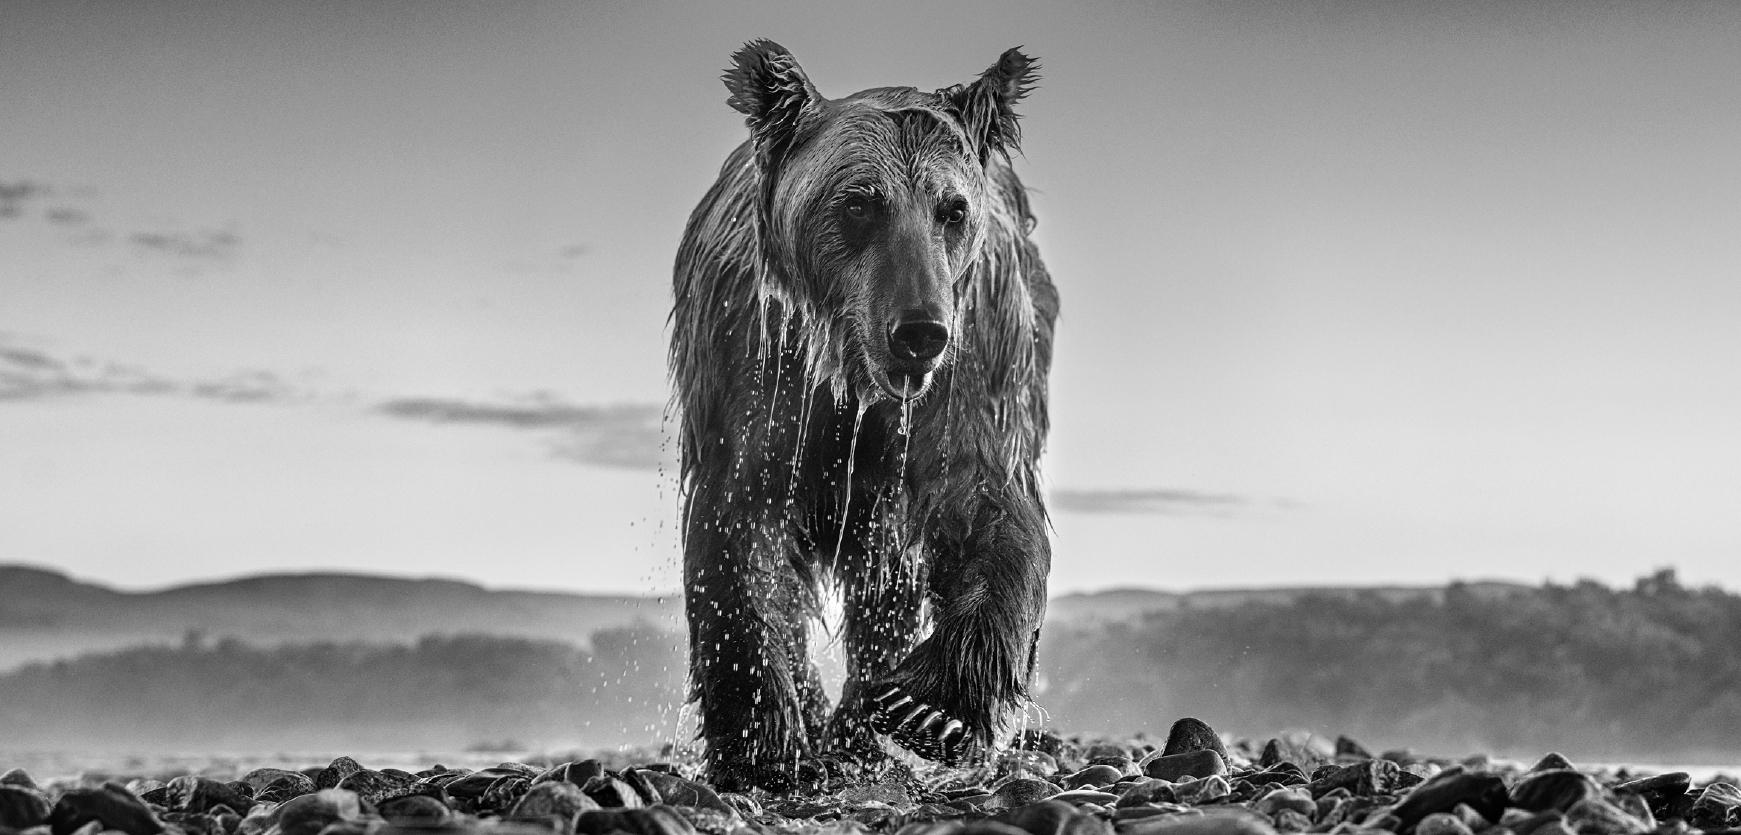 David Yarrow Figurative Photograph - 'Bear Island' - bear climbing out of a river, fine art photography, 2023